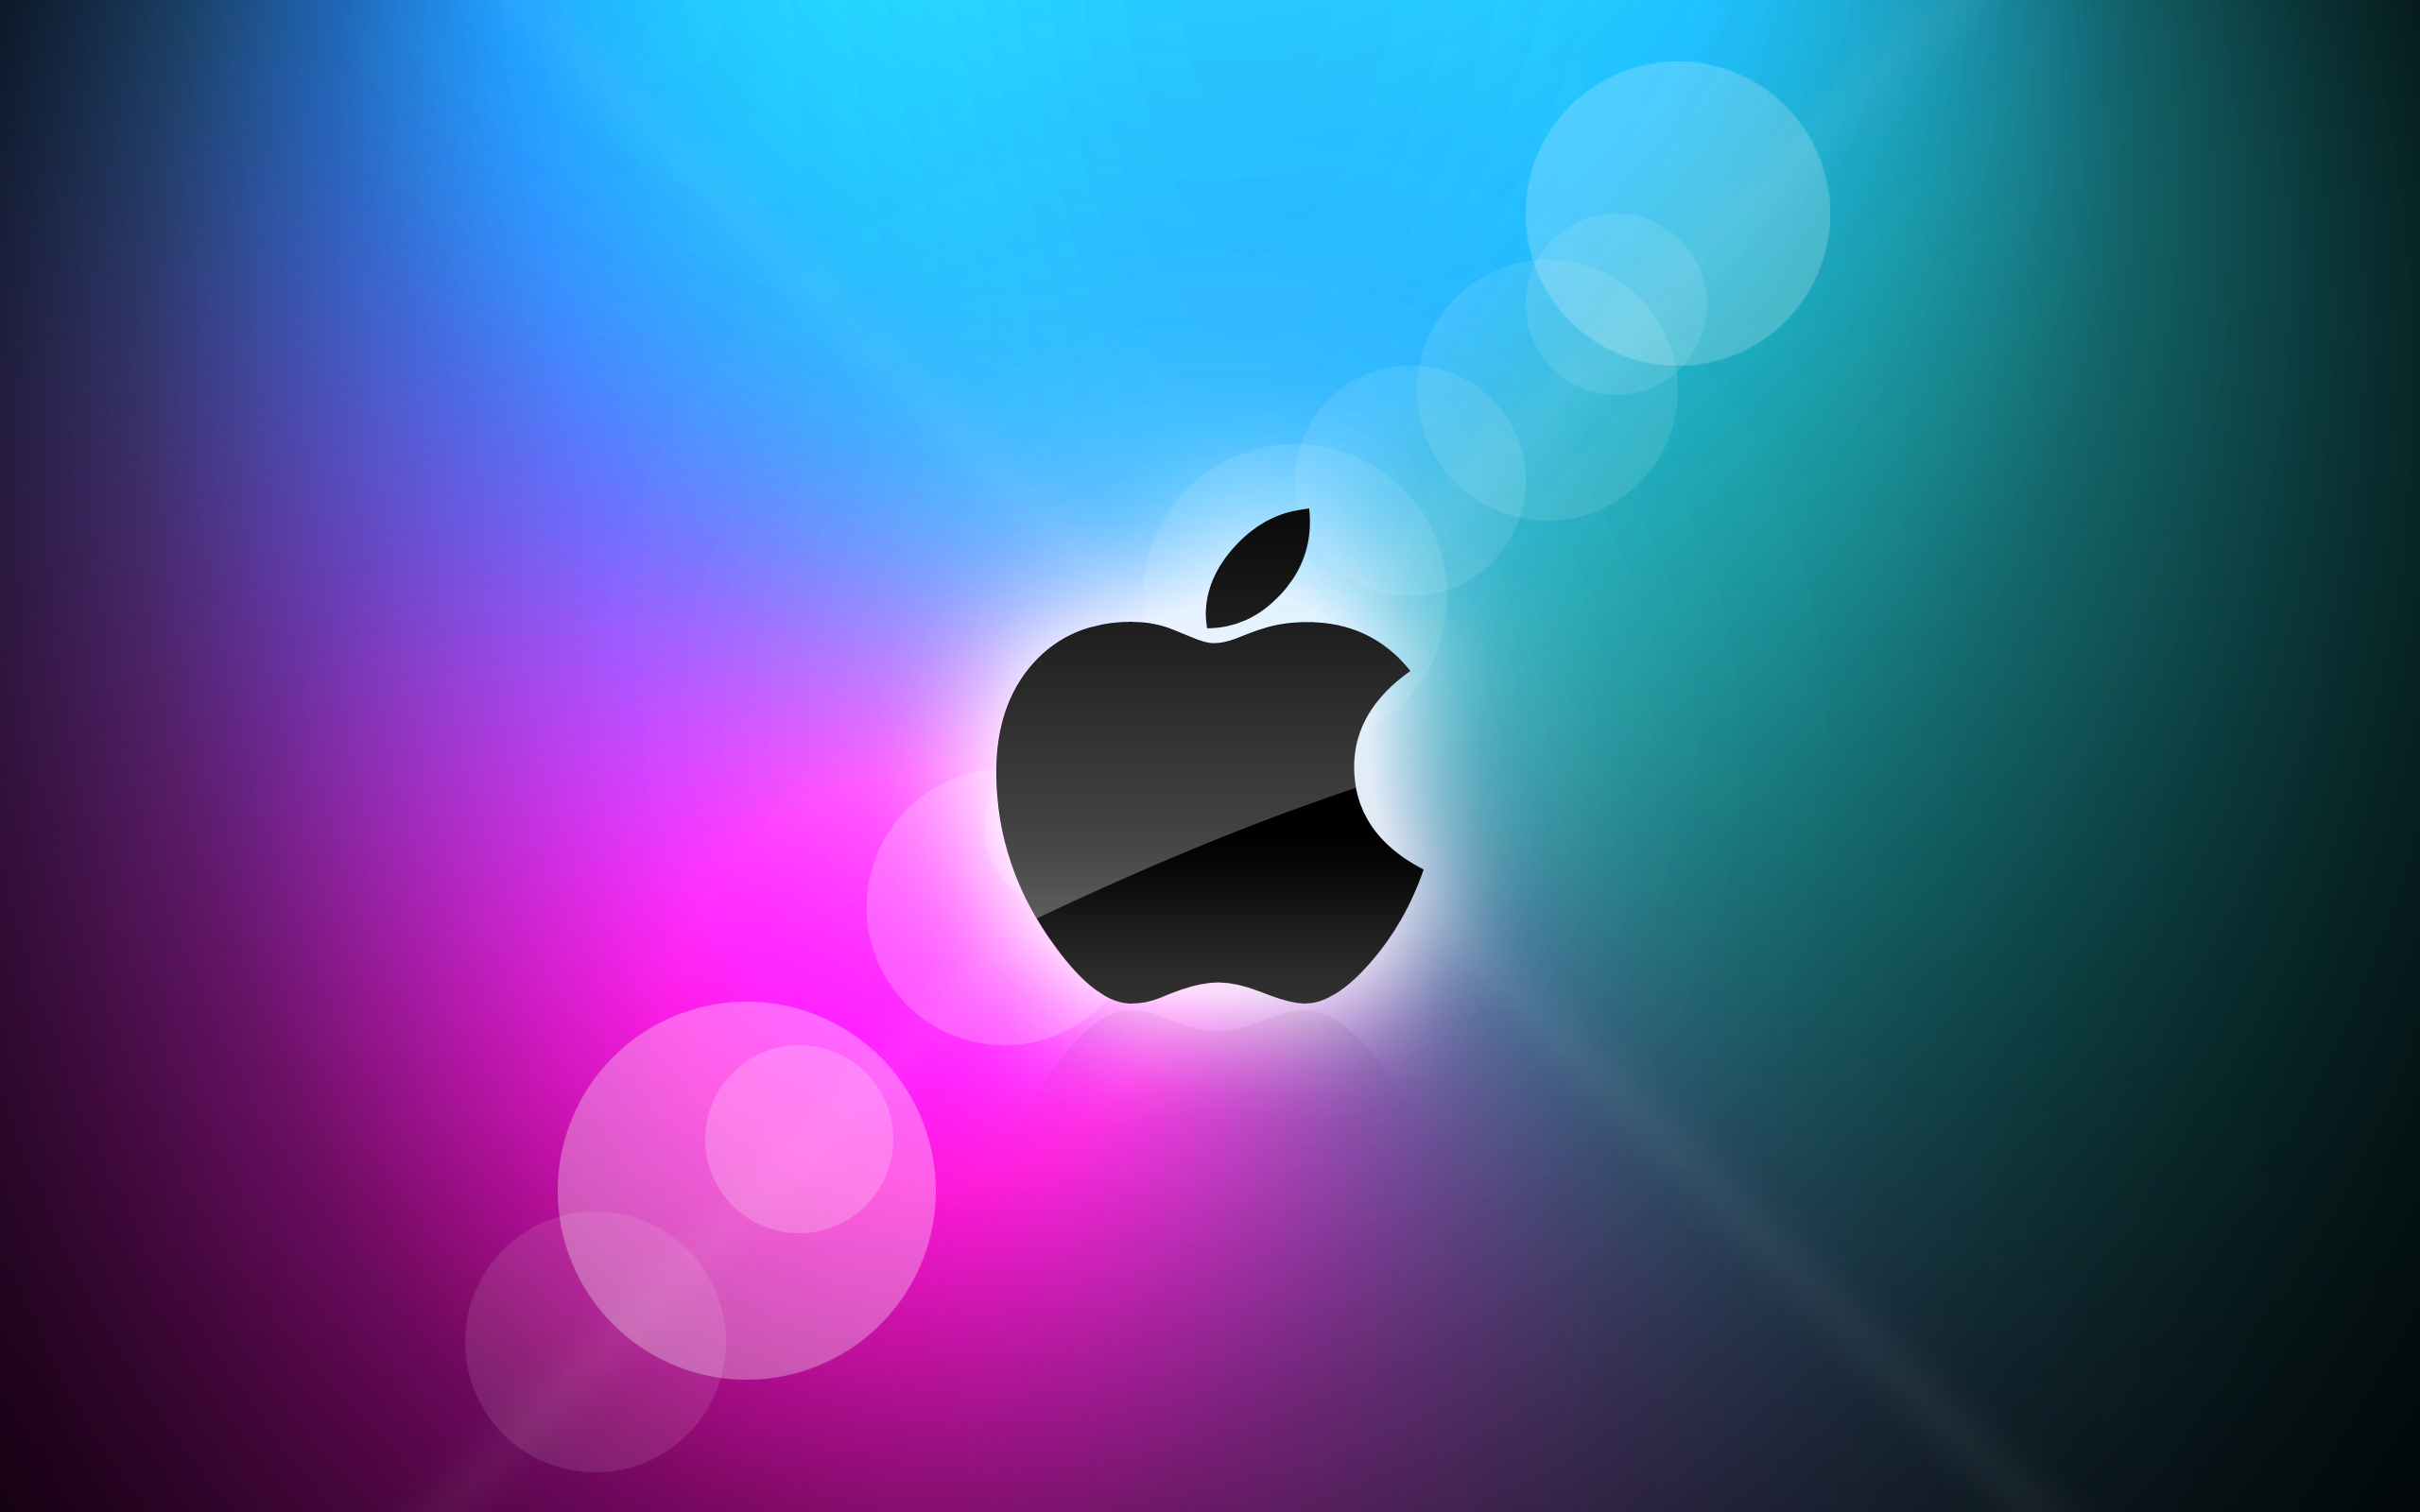 Image for Apple Mac HD Wallpaper Download Apple Mac Free Wallpaper